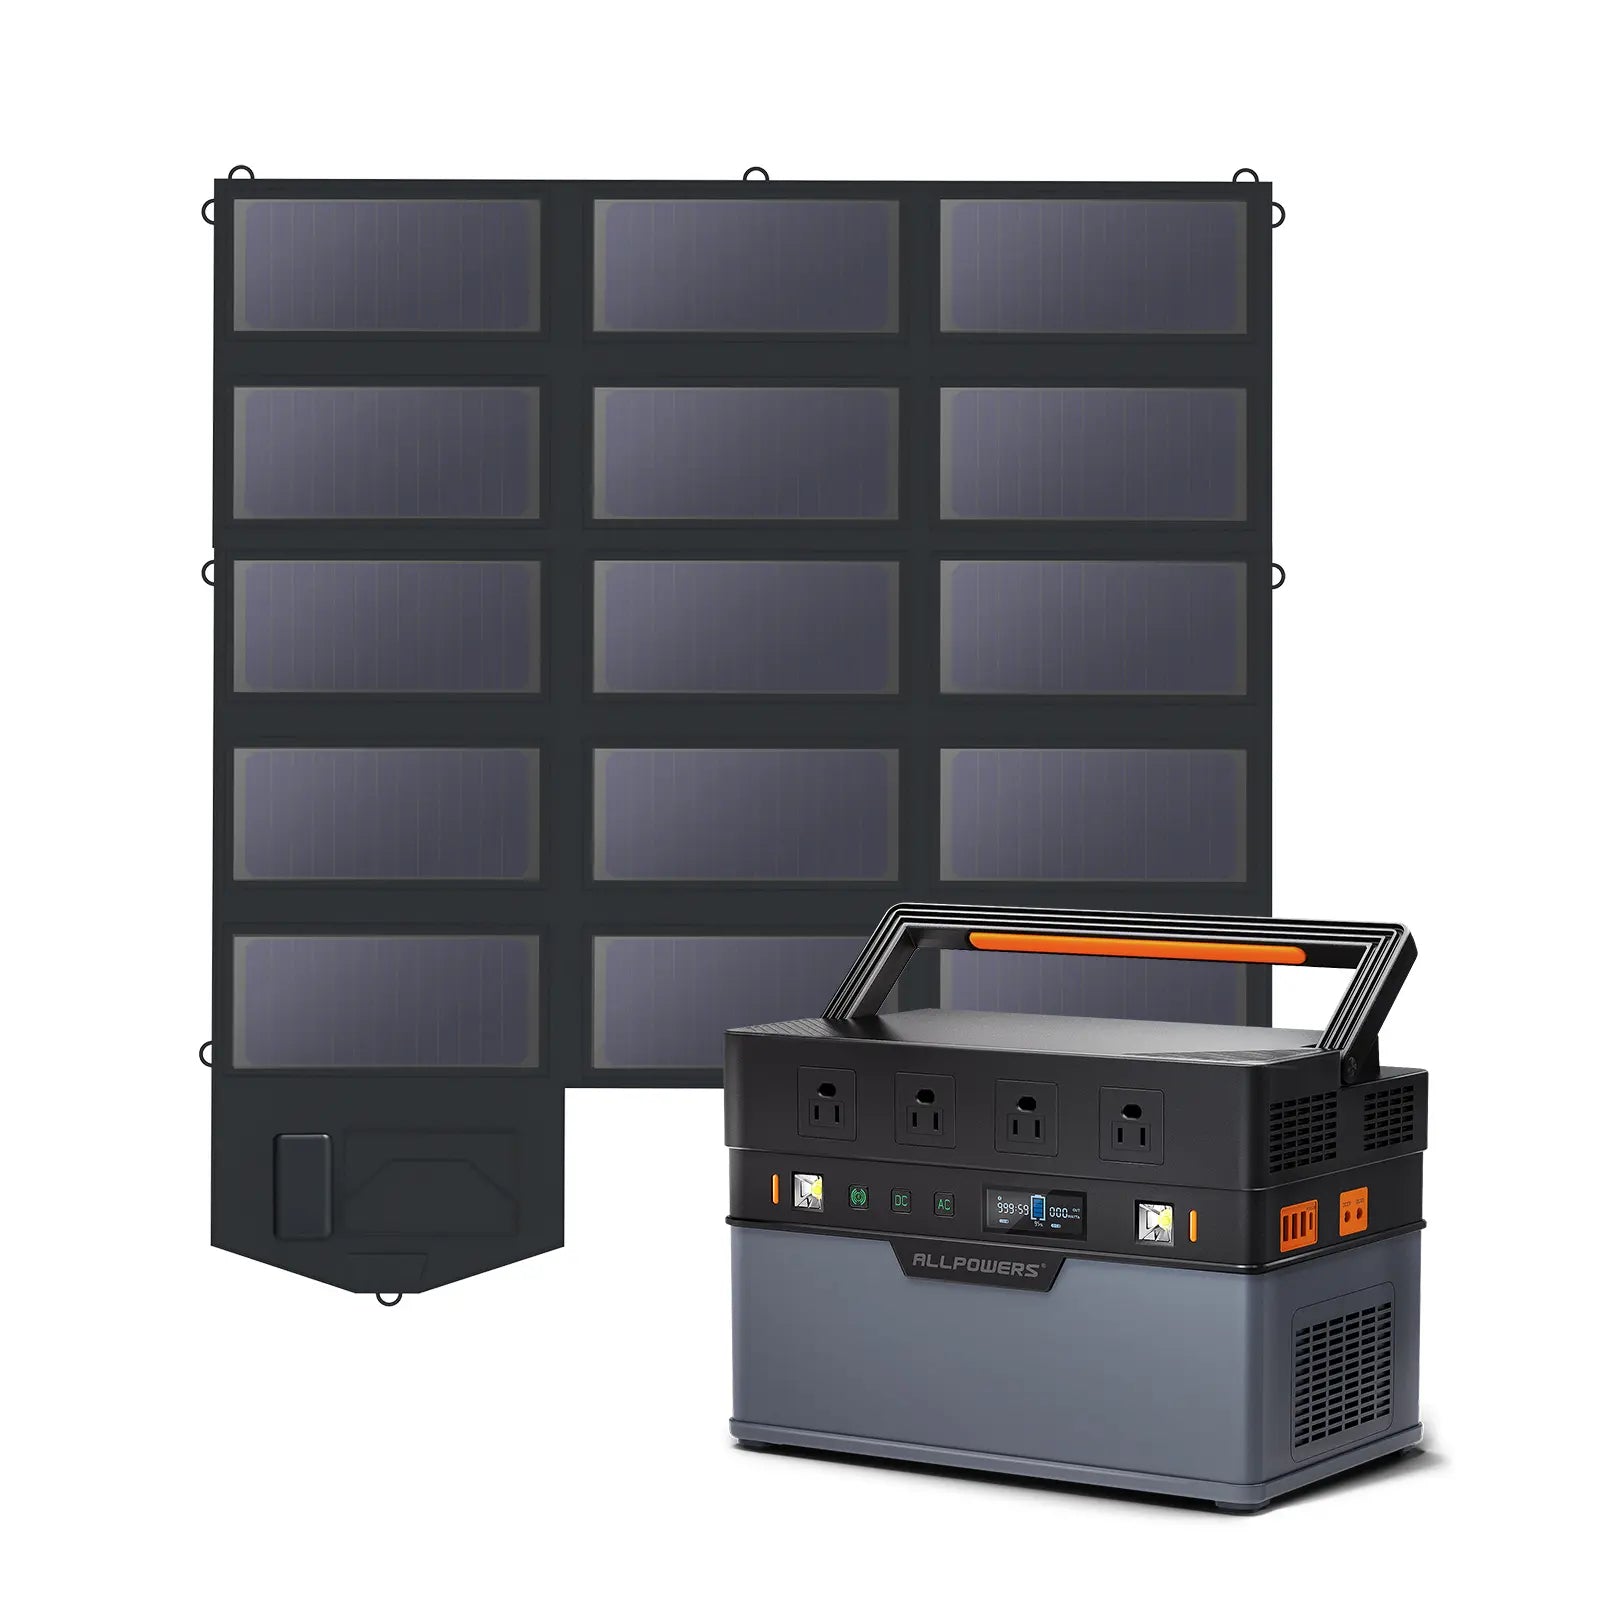 ALLPOWERS Solar Generator Kit 1500W (S1500 + SP012 100W Solar Panel)